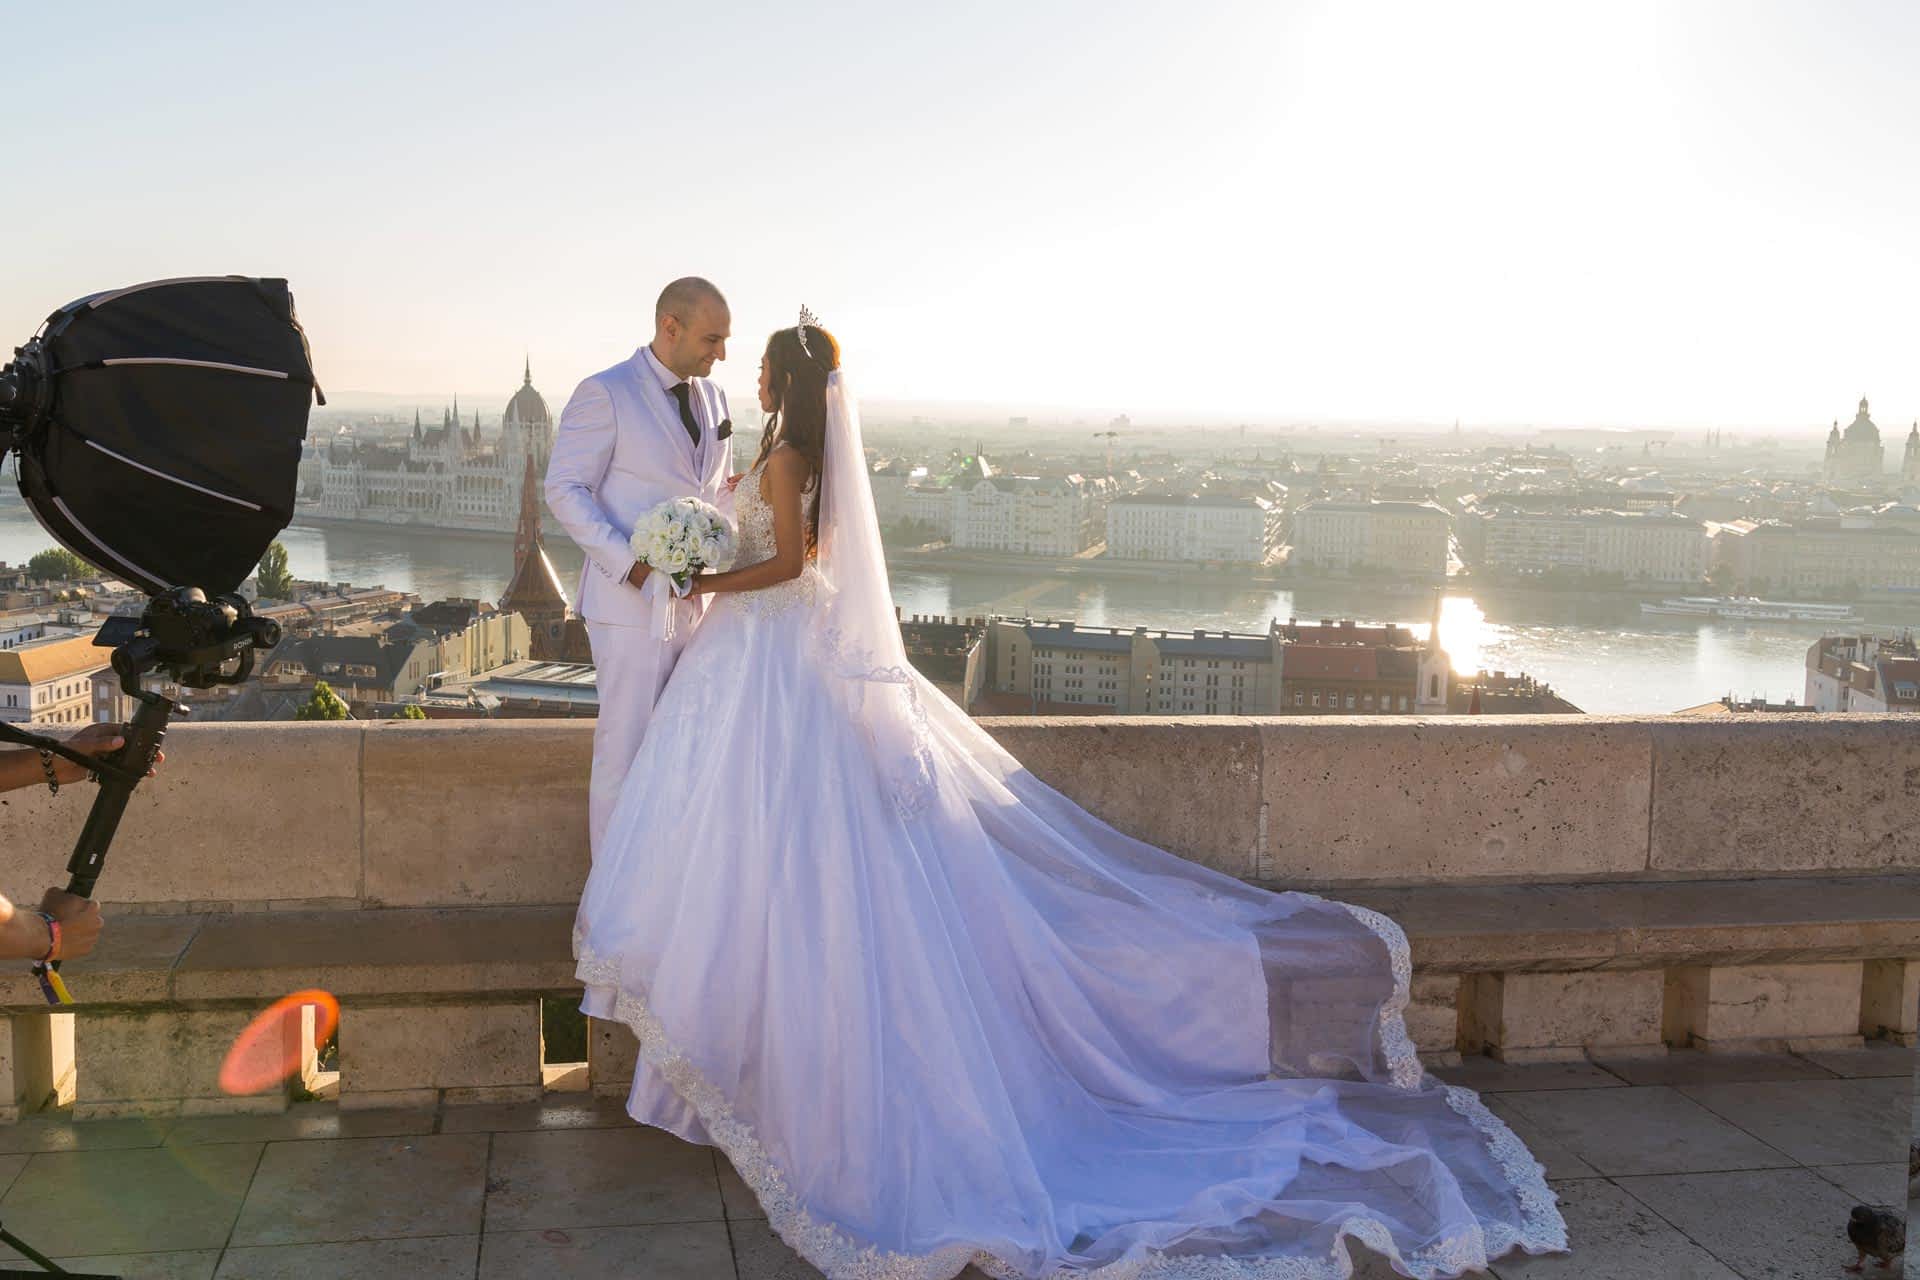 2022 Magic Proposal Photographer & Pre-Wedding Budapest BA prewedding edit Instawalk Your memories captured by a local Photographer / Videographer in Budapest.